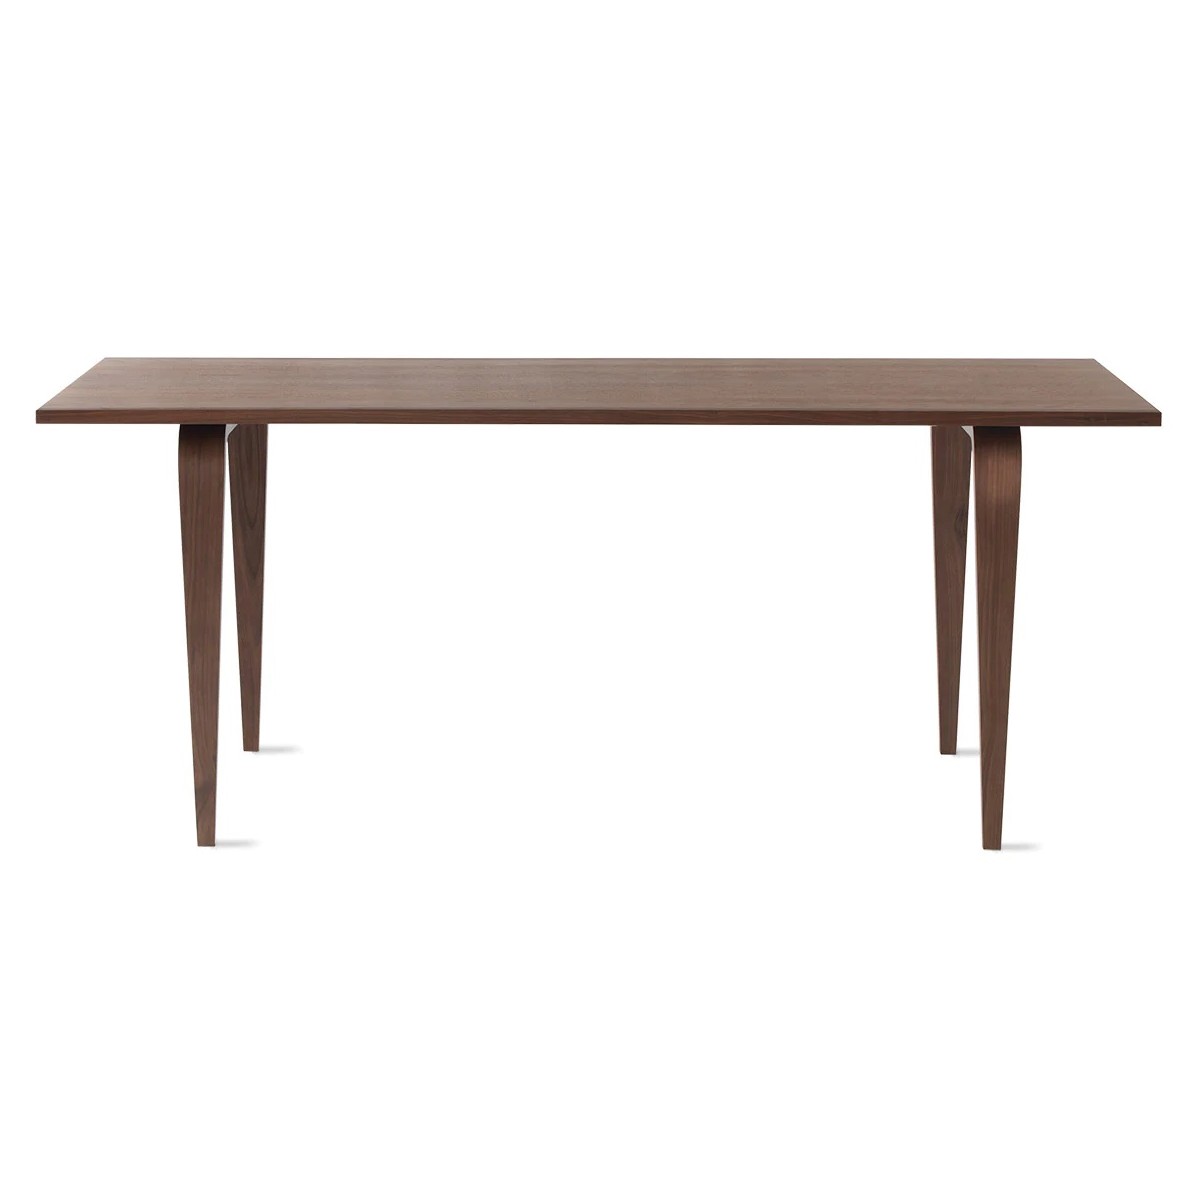 182,8 x 86,4 cm – rectangular table – Classic walnut